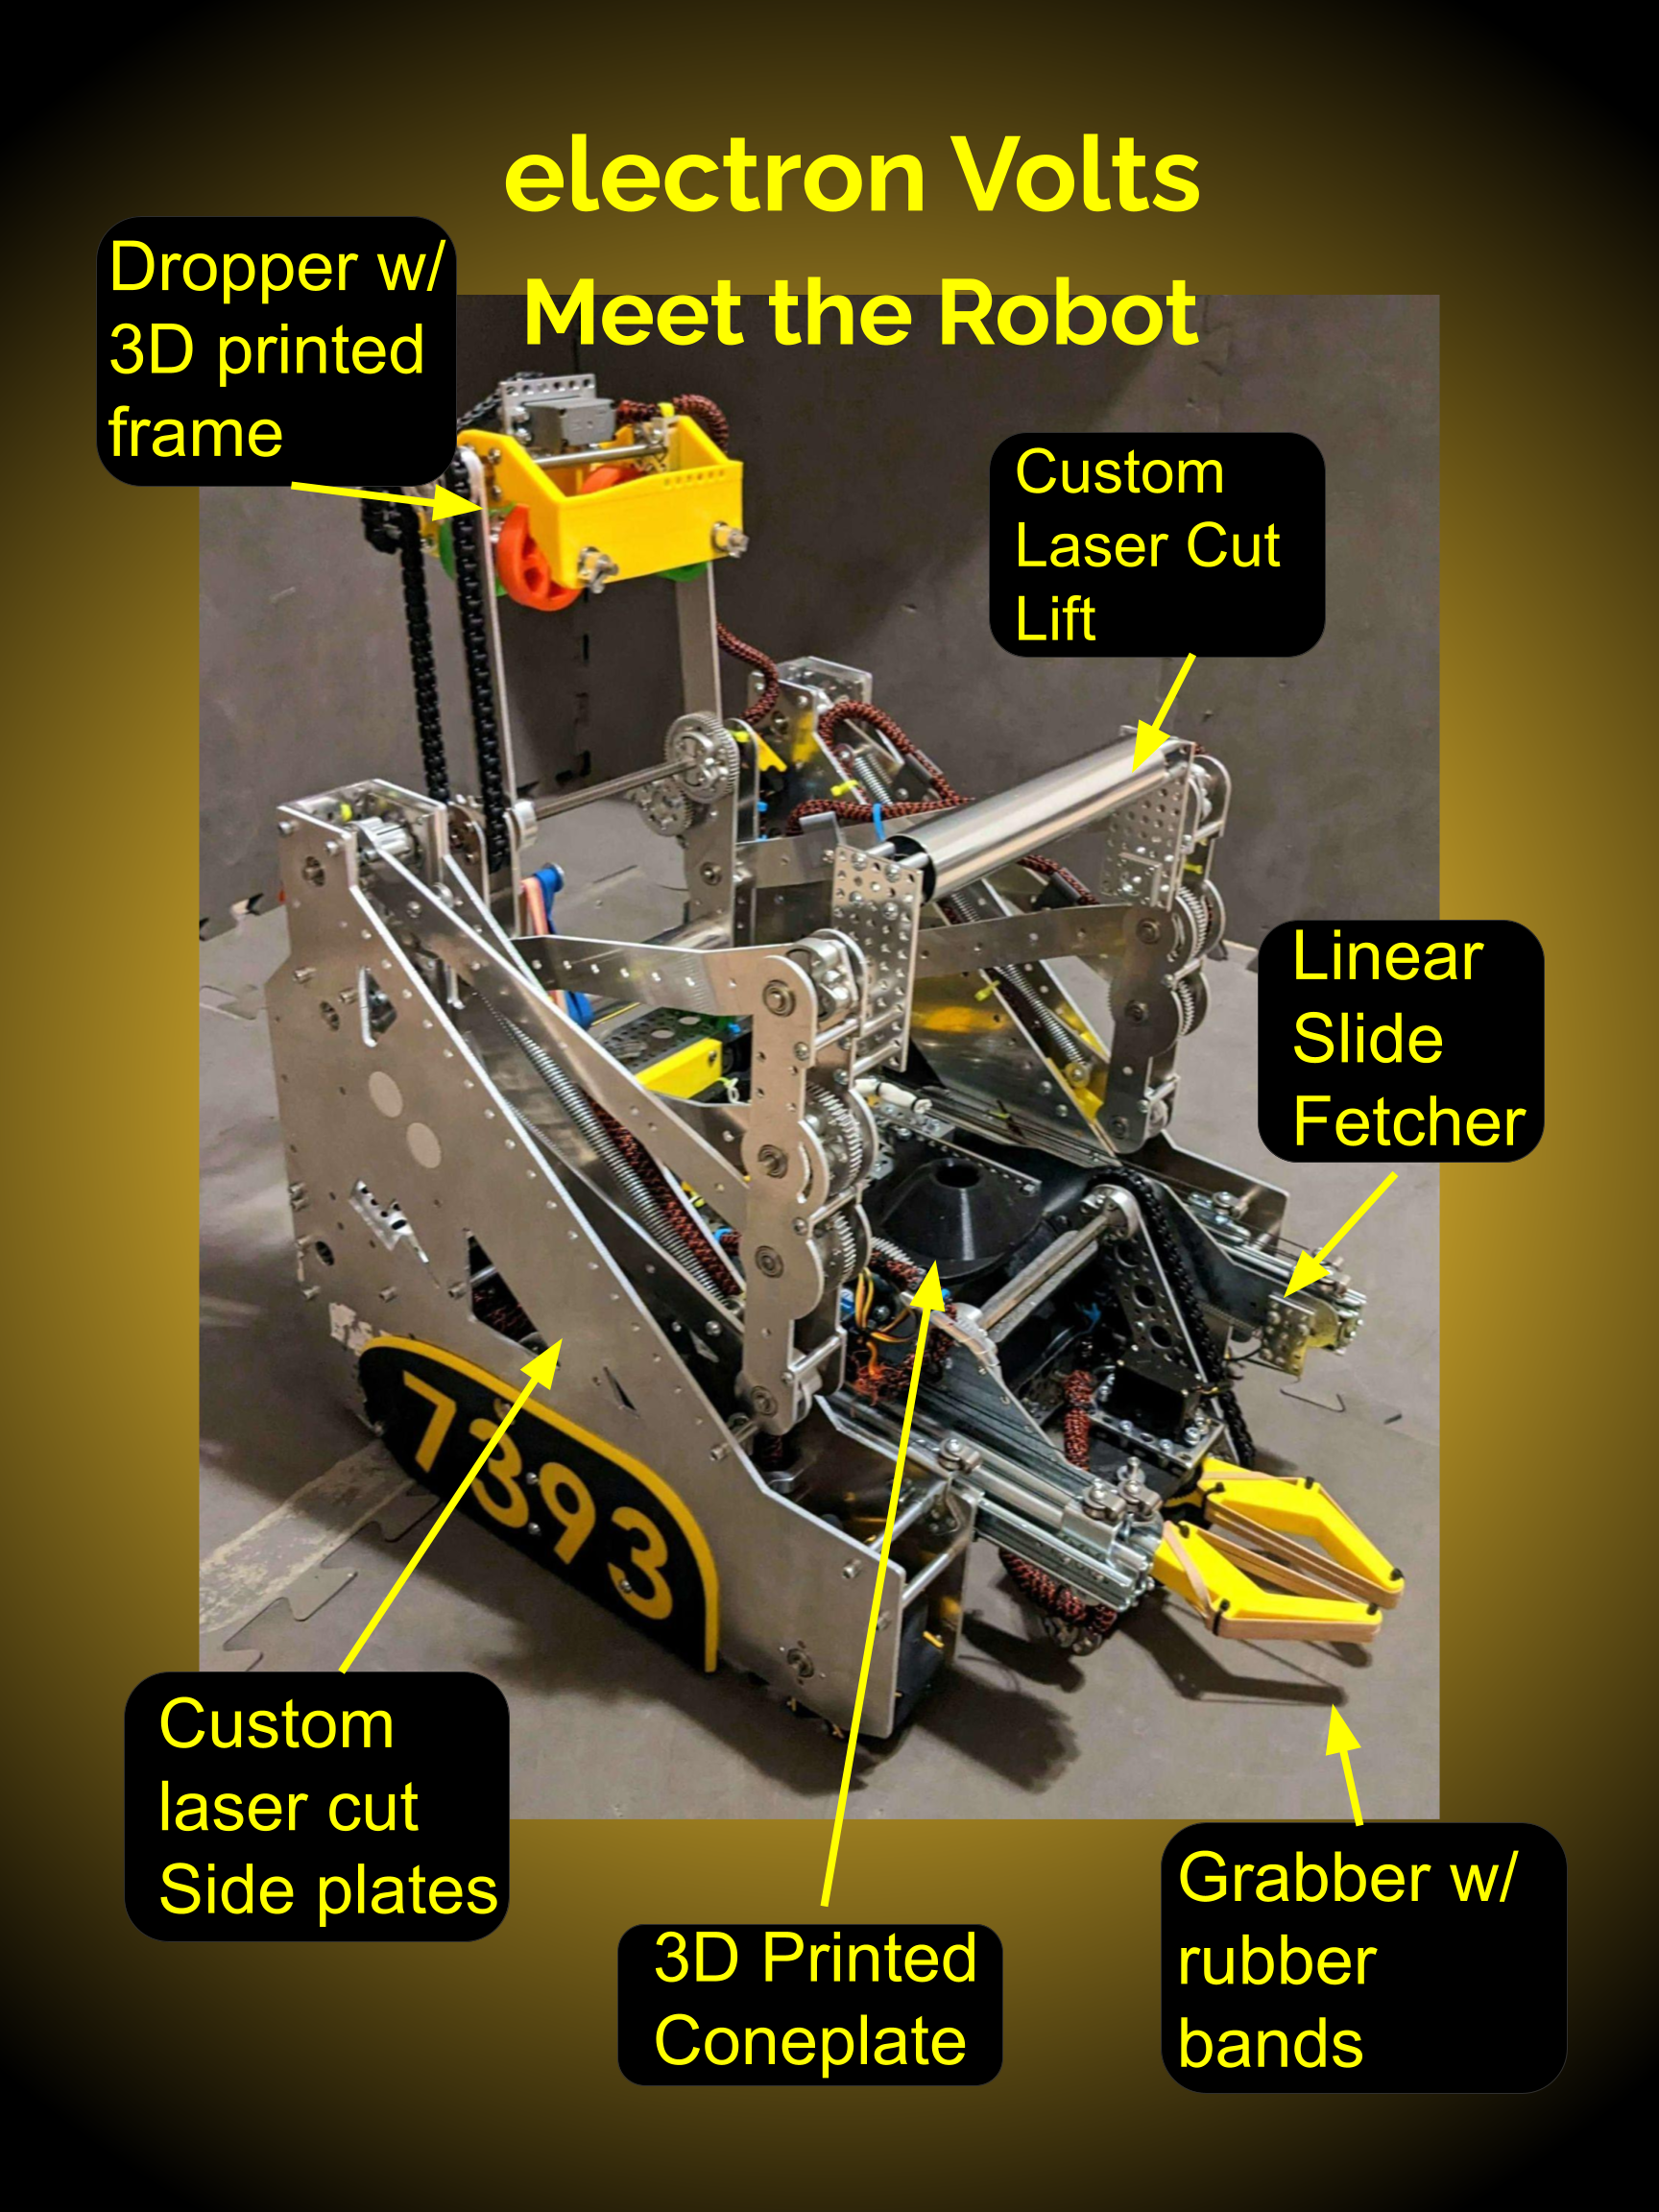 Last year's robot design